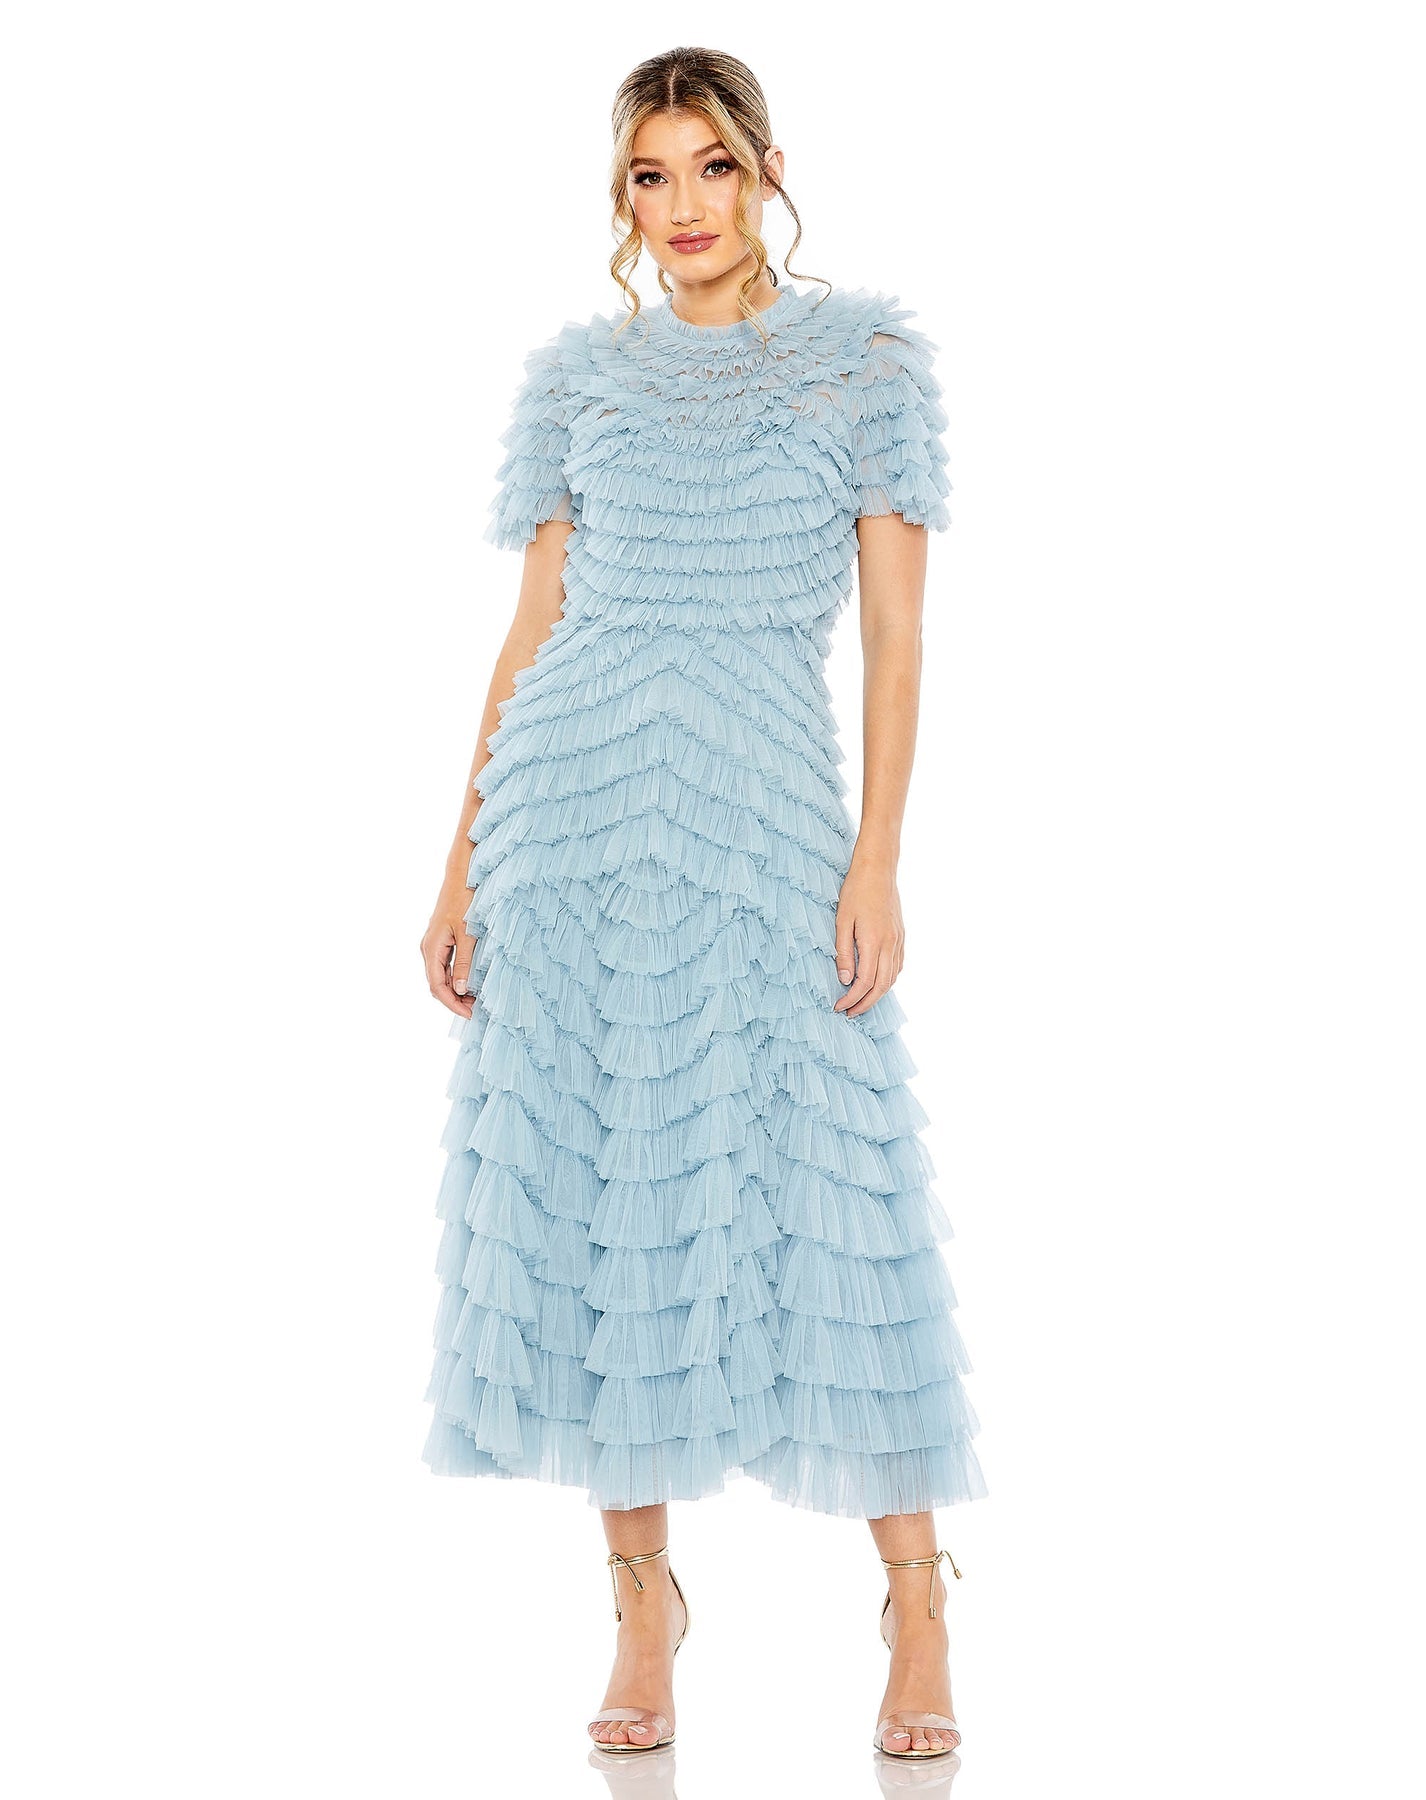 Scoop Women's Tiered Ruffle Dress with Flutter Sleeves - Walmart.com